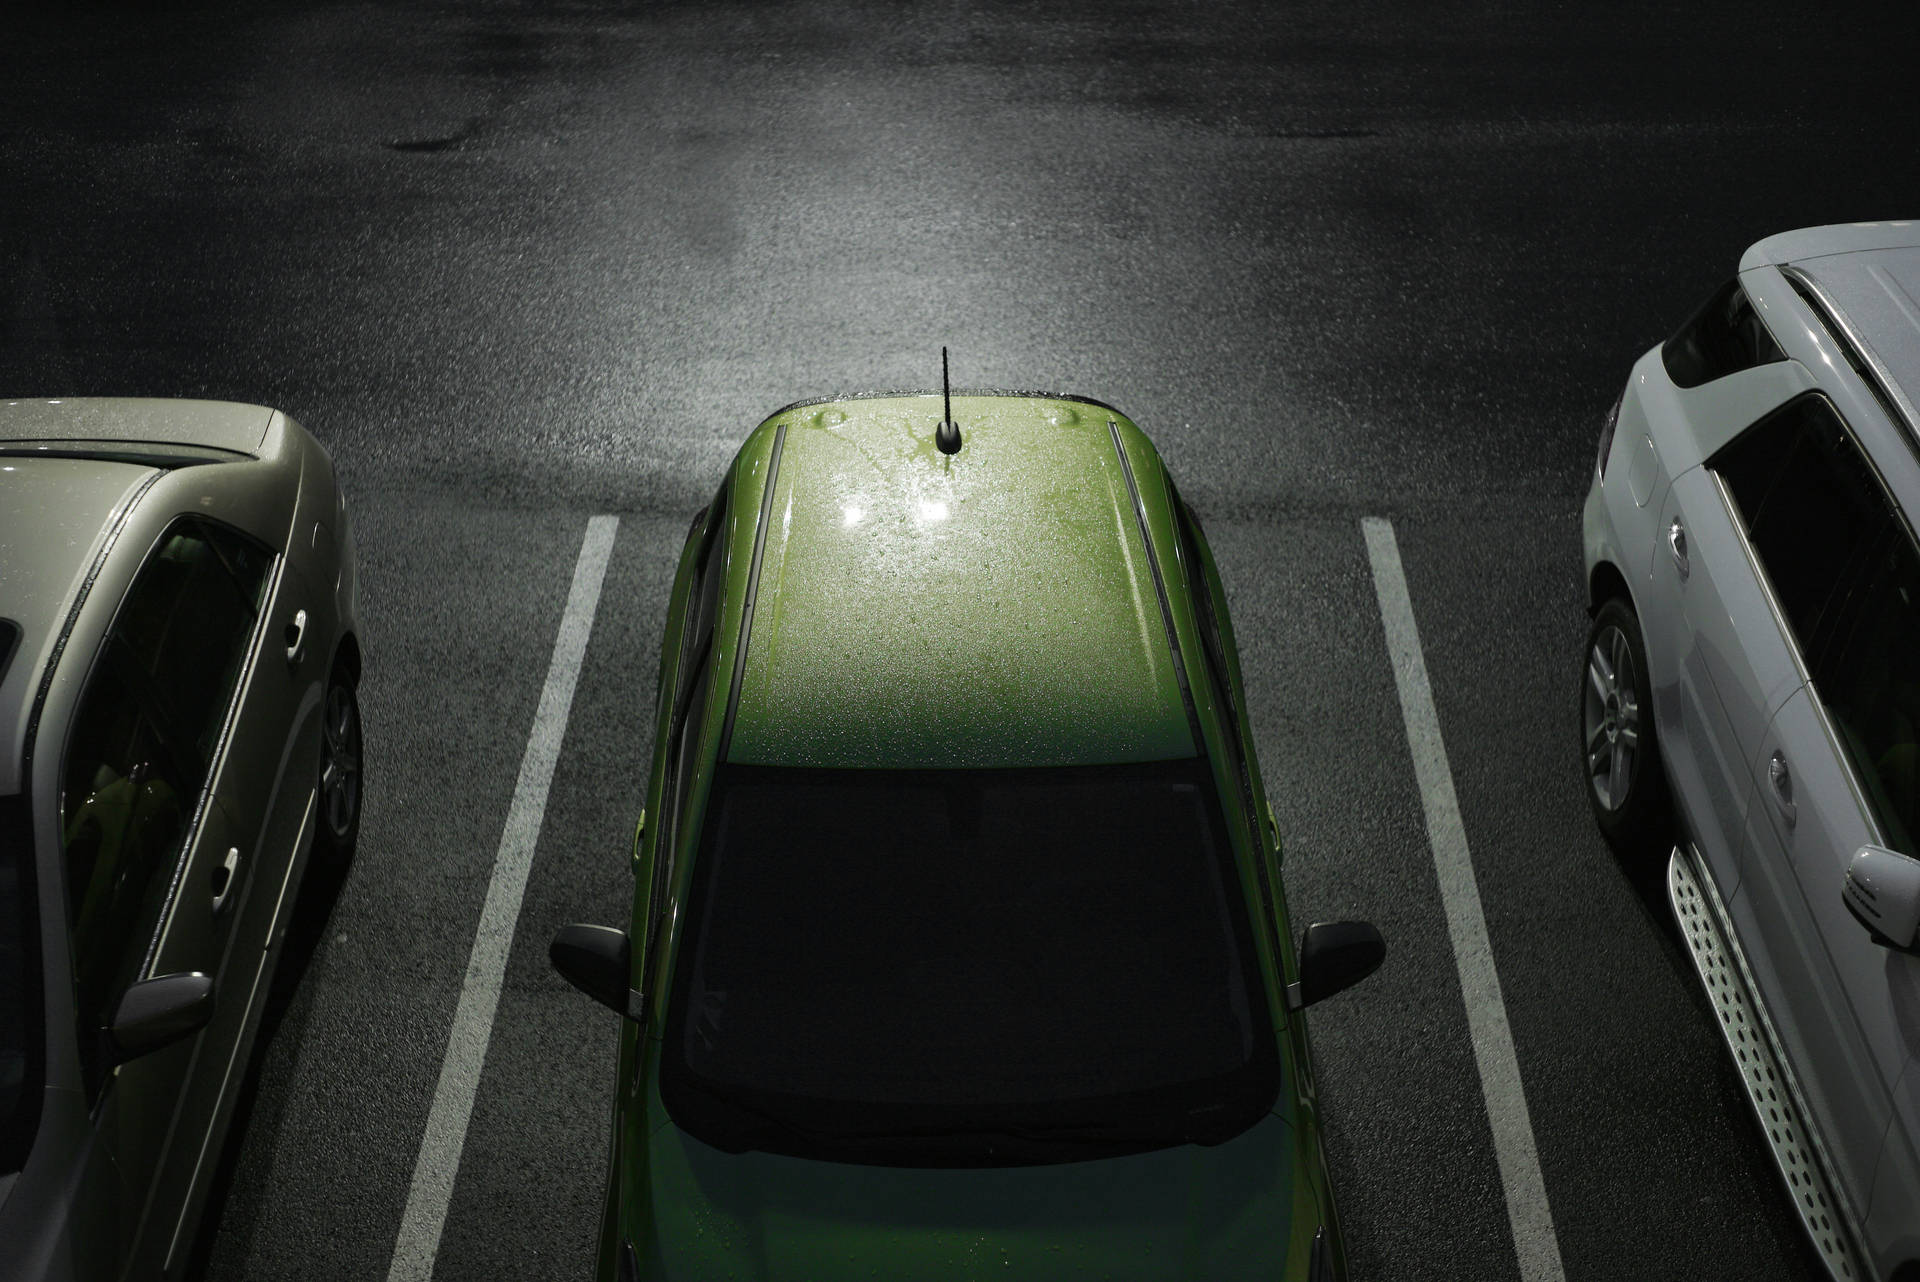 Hd Green Car Parked In Parking Lot Wallpaper